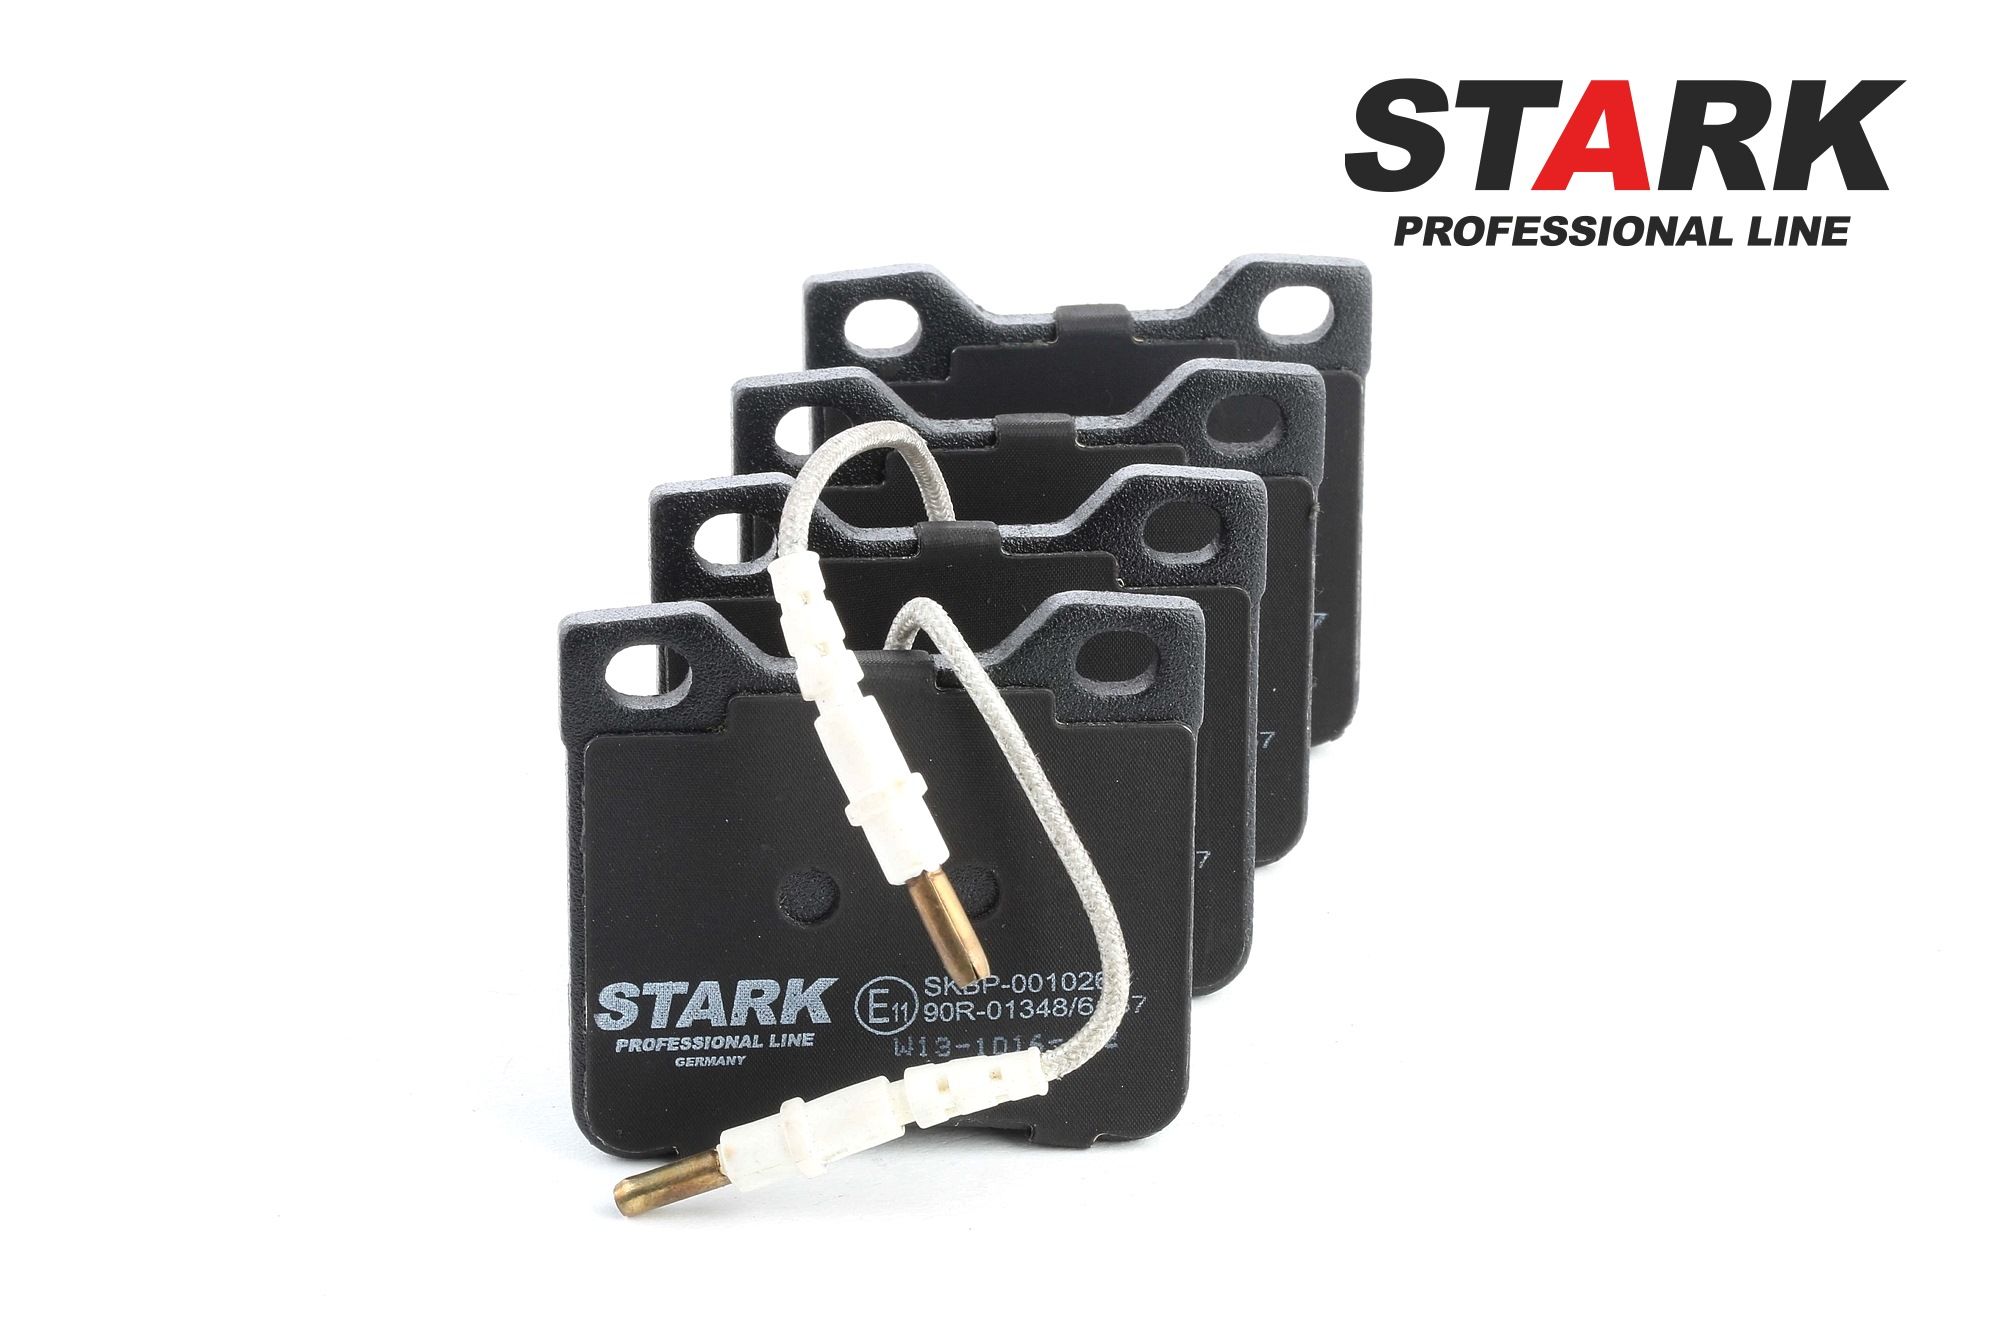 STARK Bremsbelagsatz SKBP-0010266